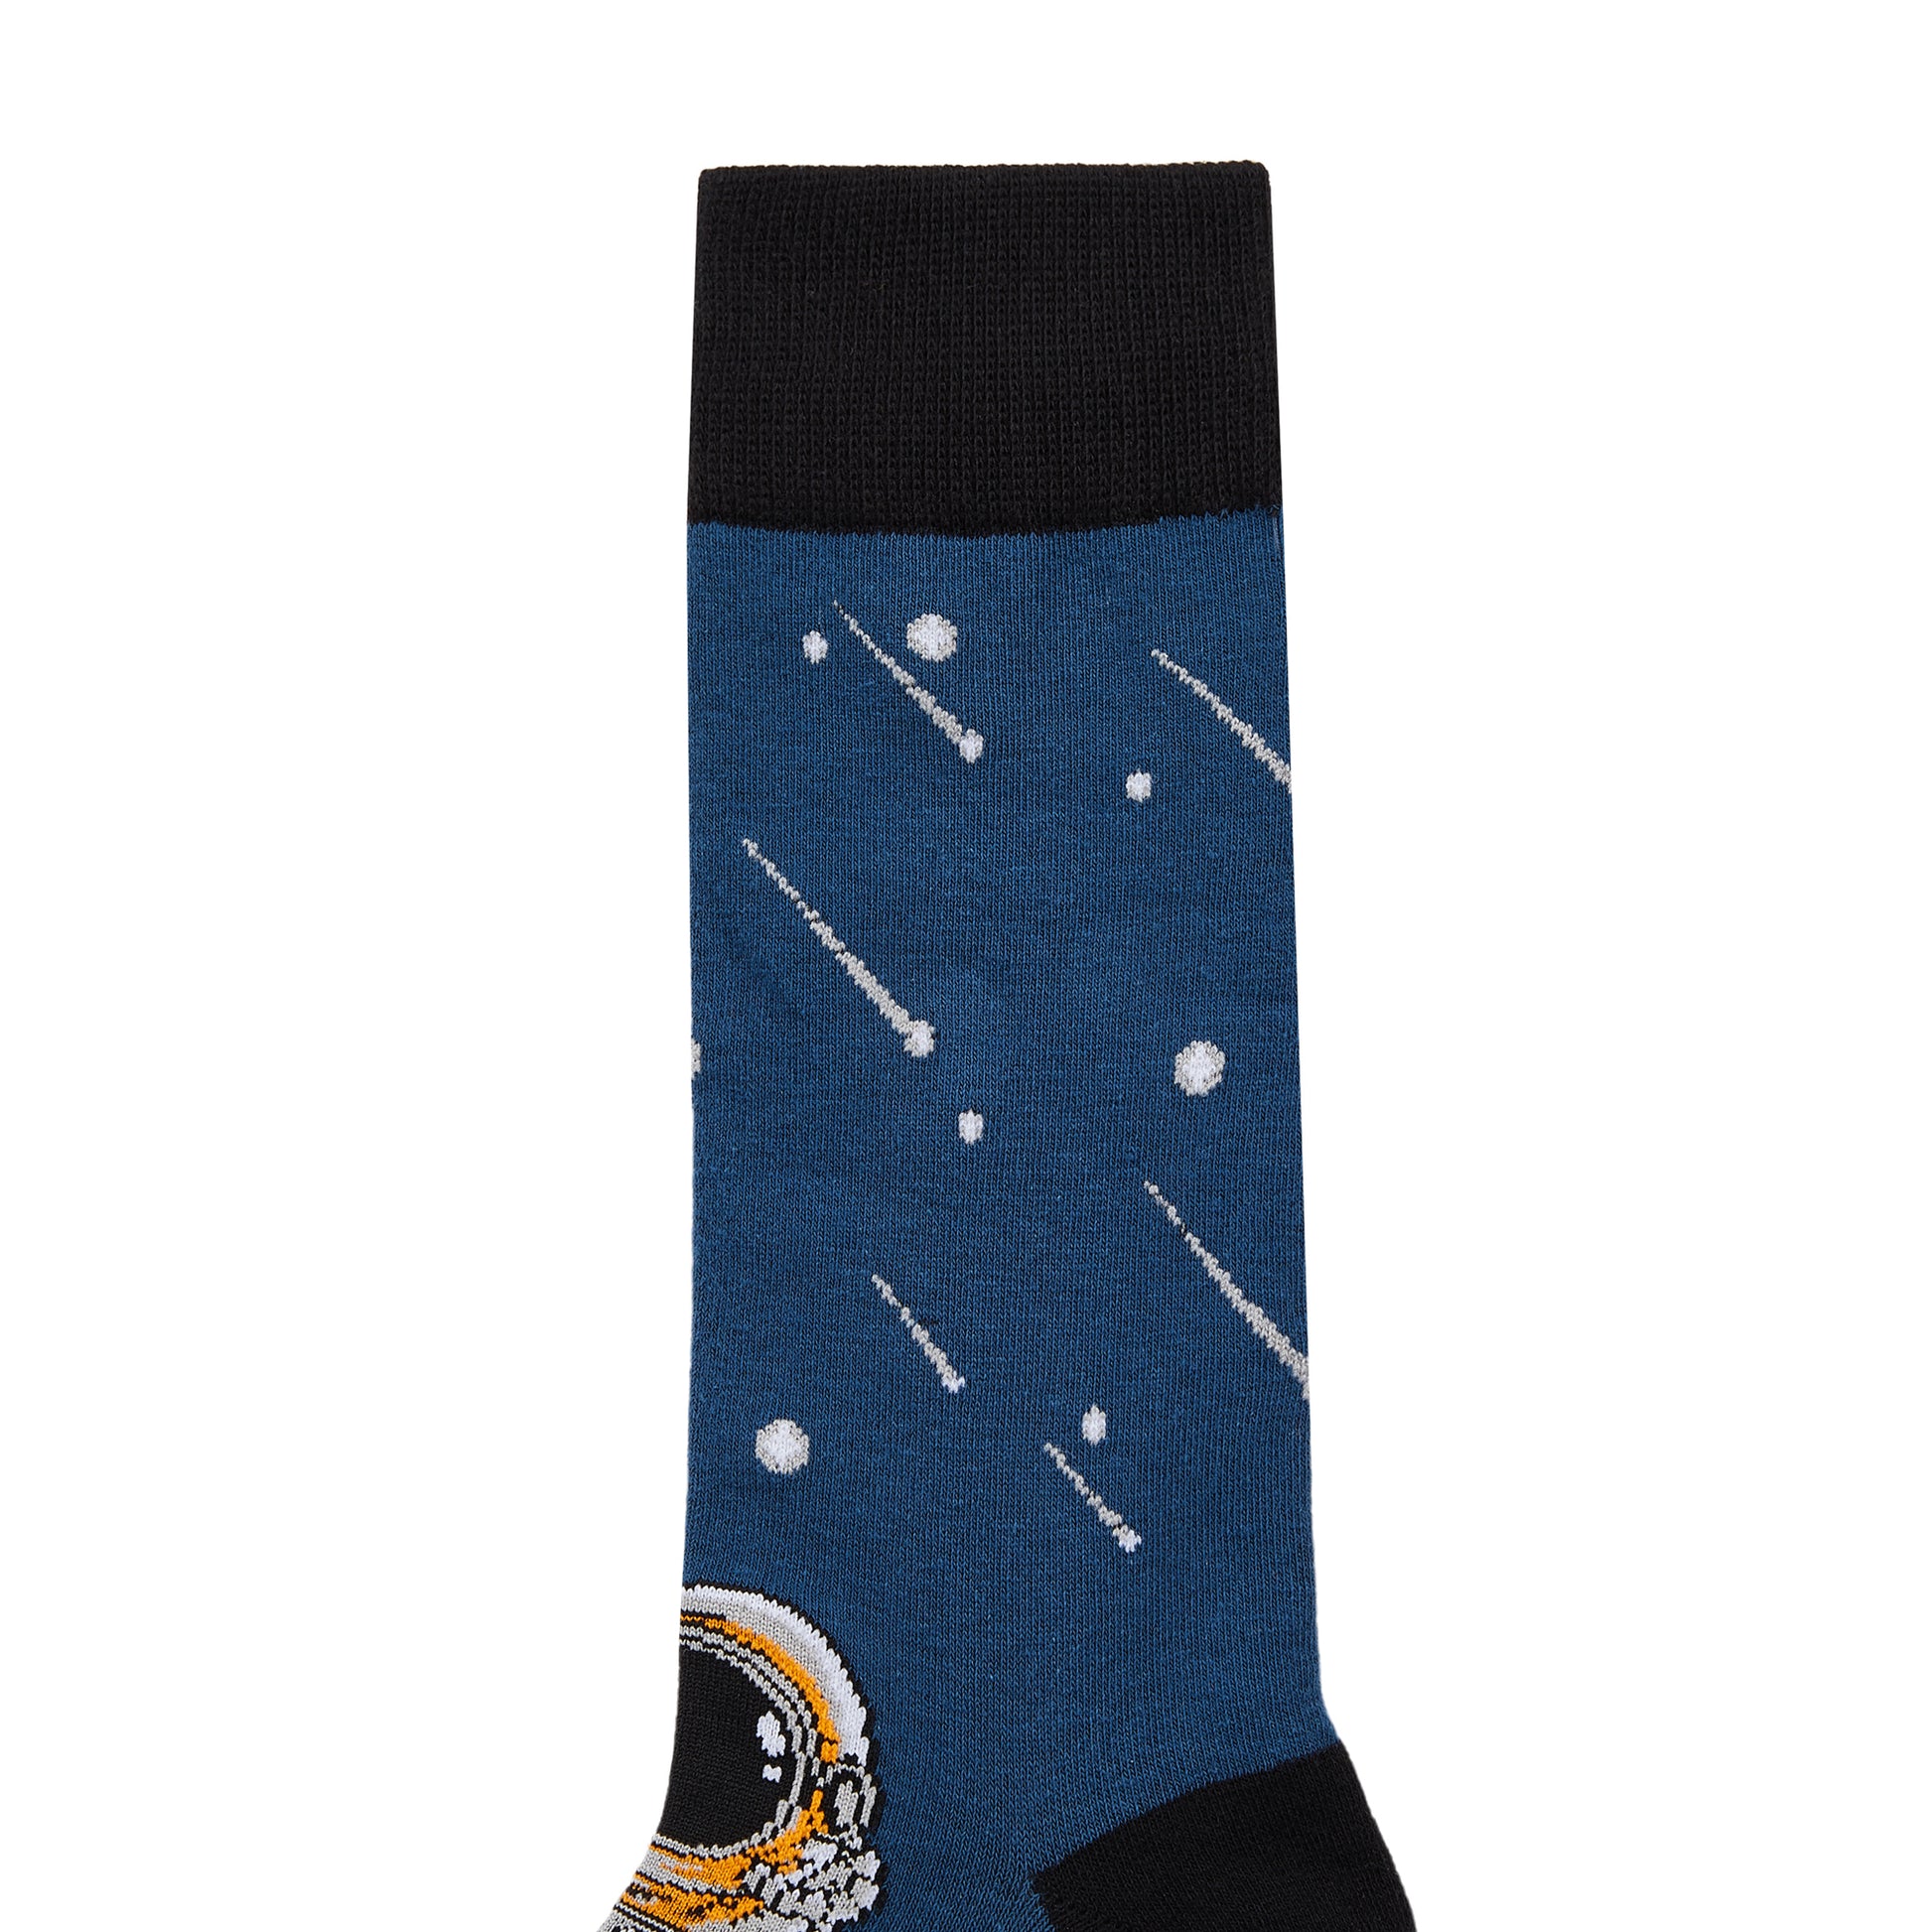 Meteor Shower Printed Mid-Calf Length Socks - IDENTITY Apparel Shop